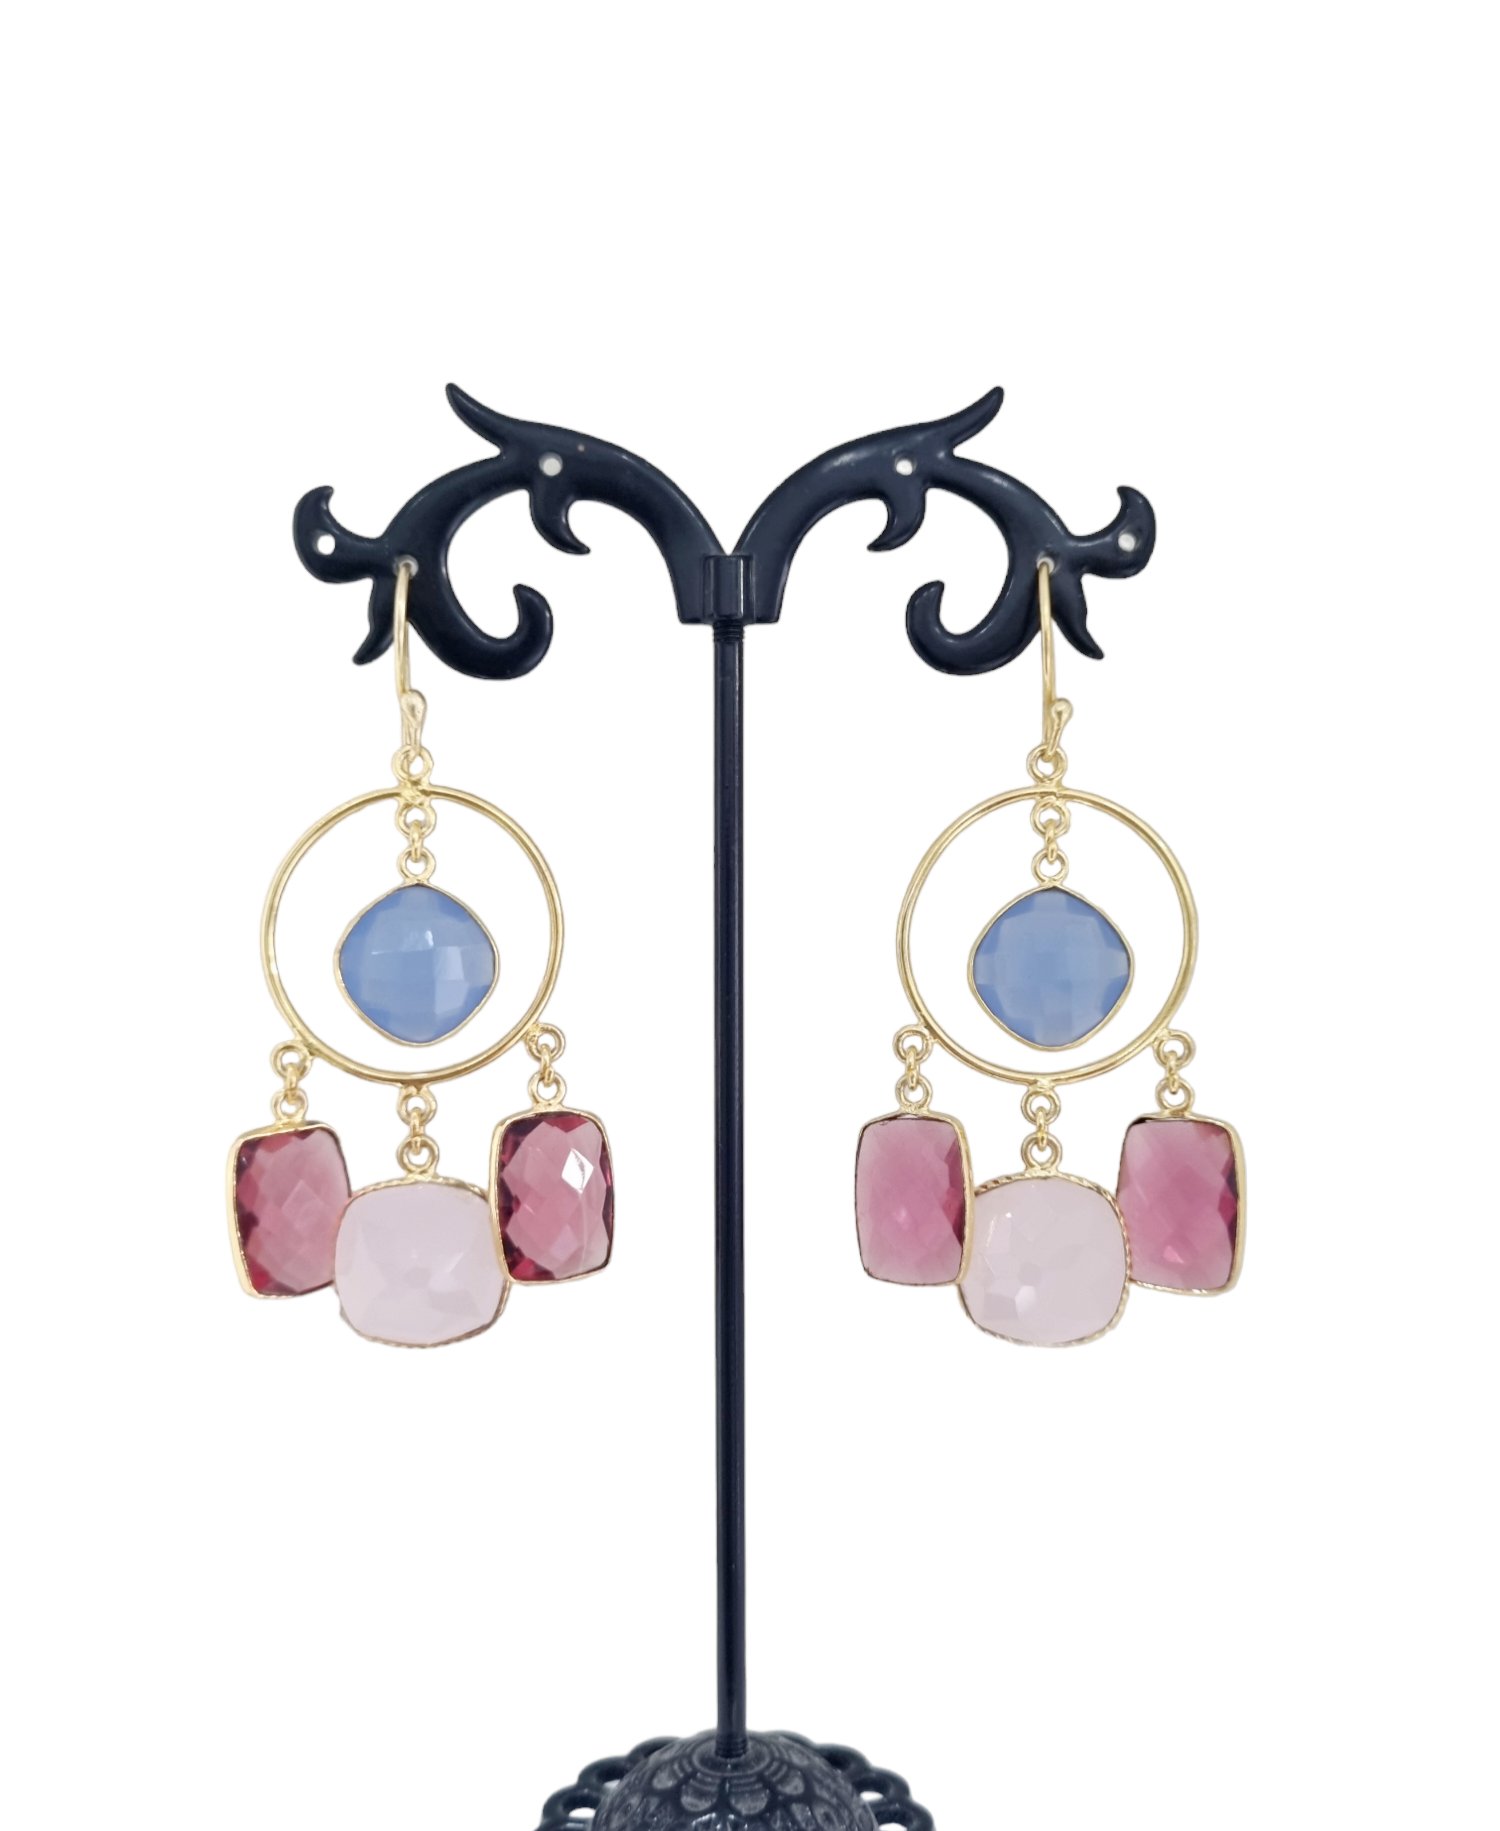 Quartz and brass earrings – Length 6.5cm, Weight 7.9gr – Elegant accessory